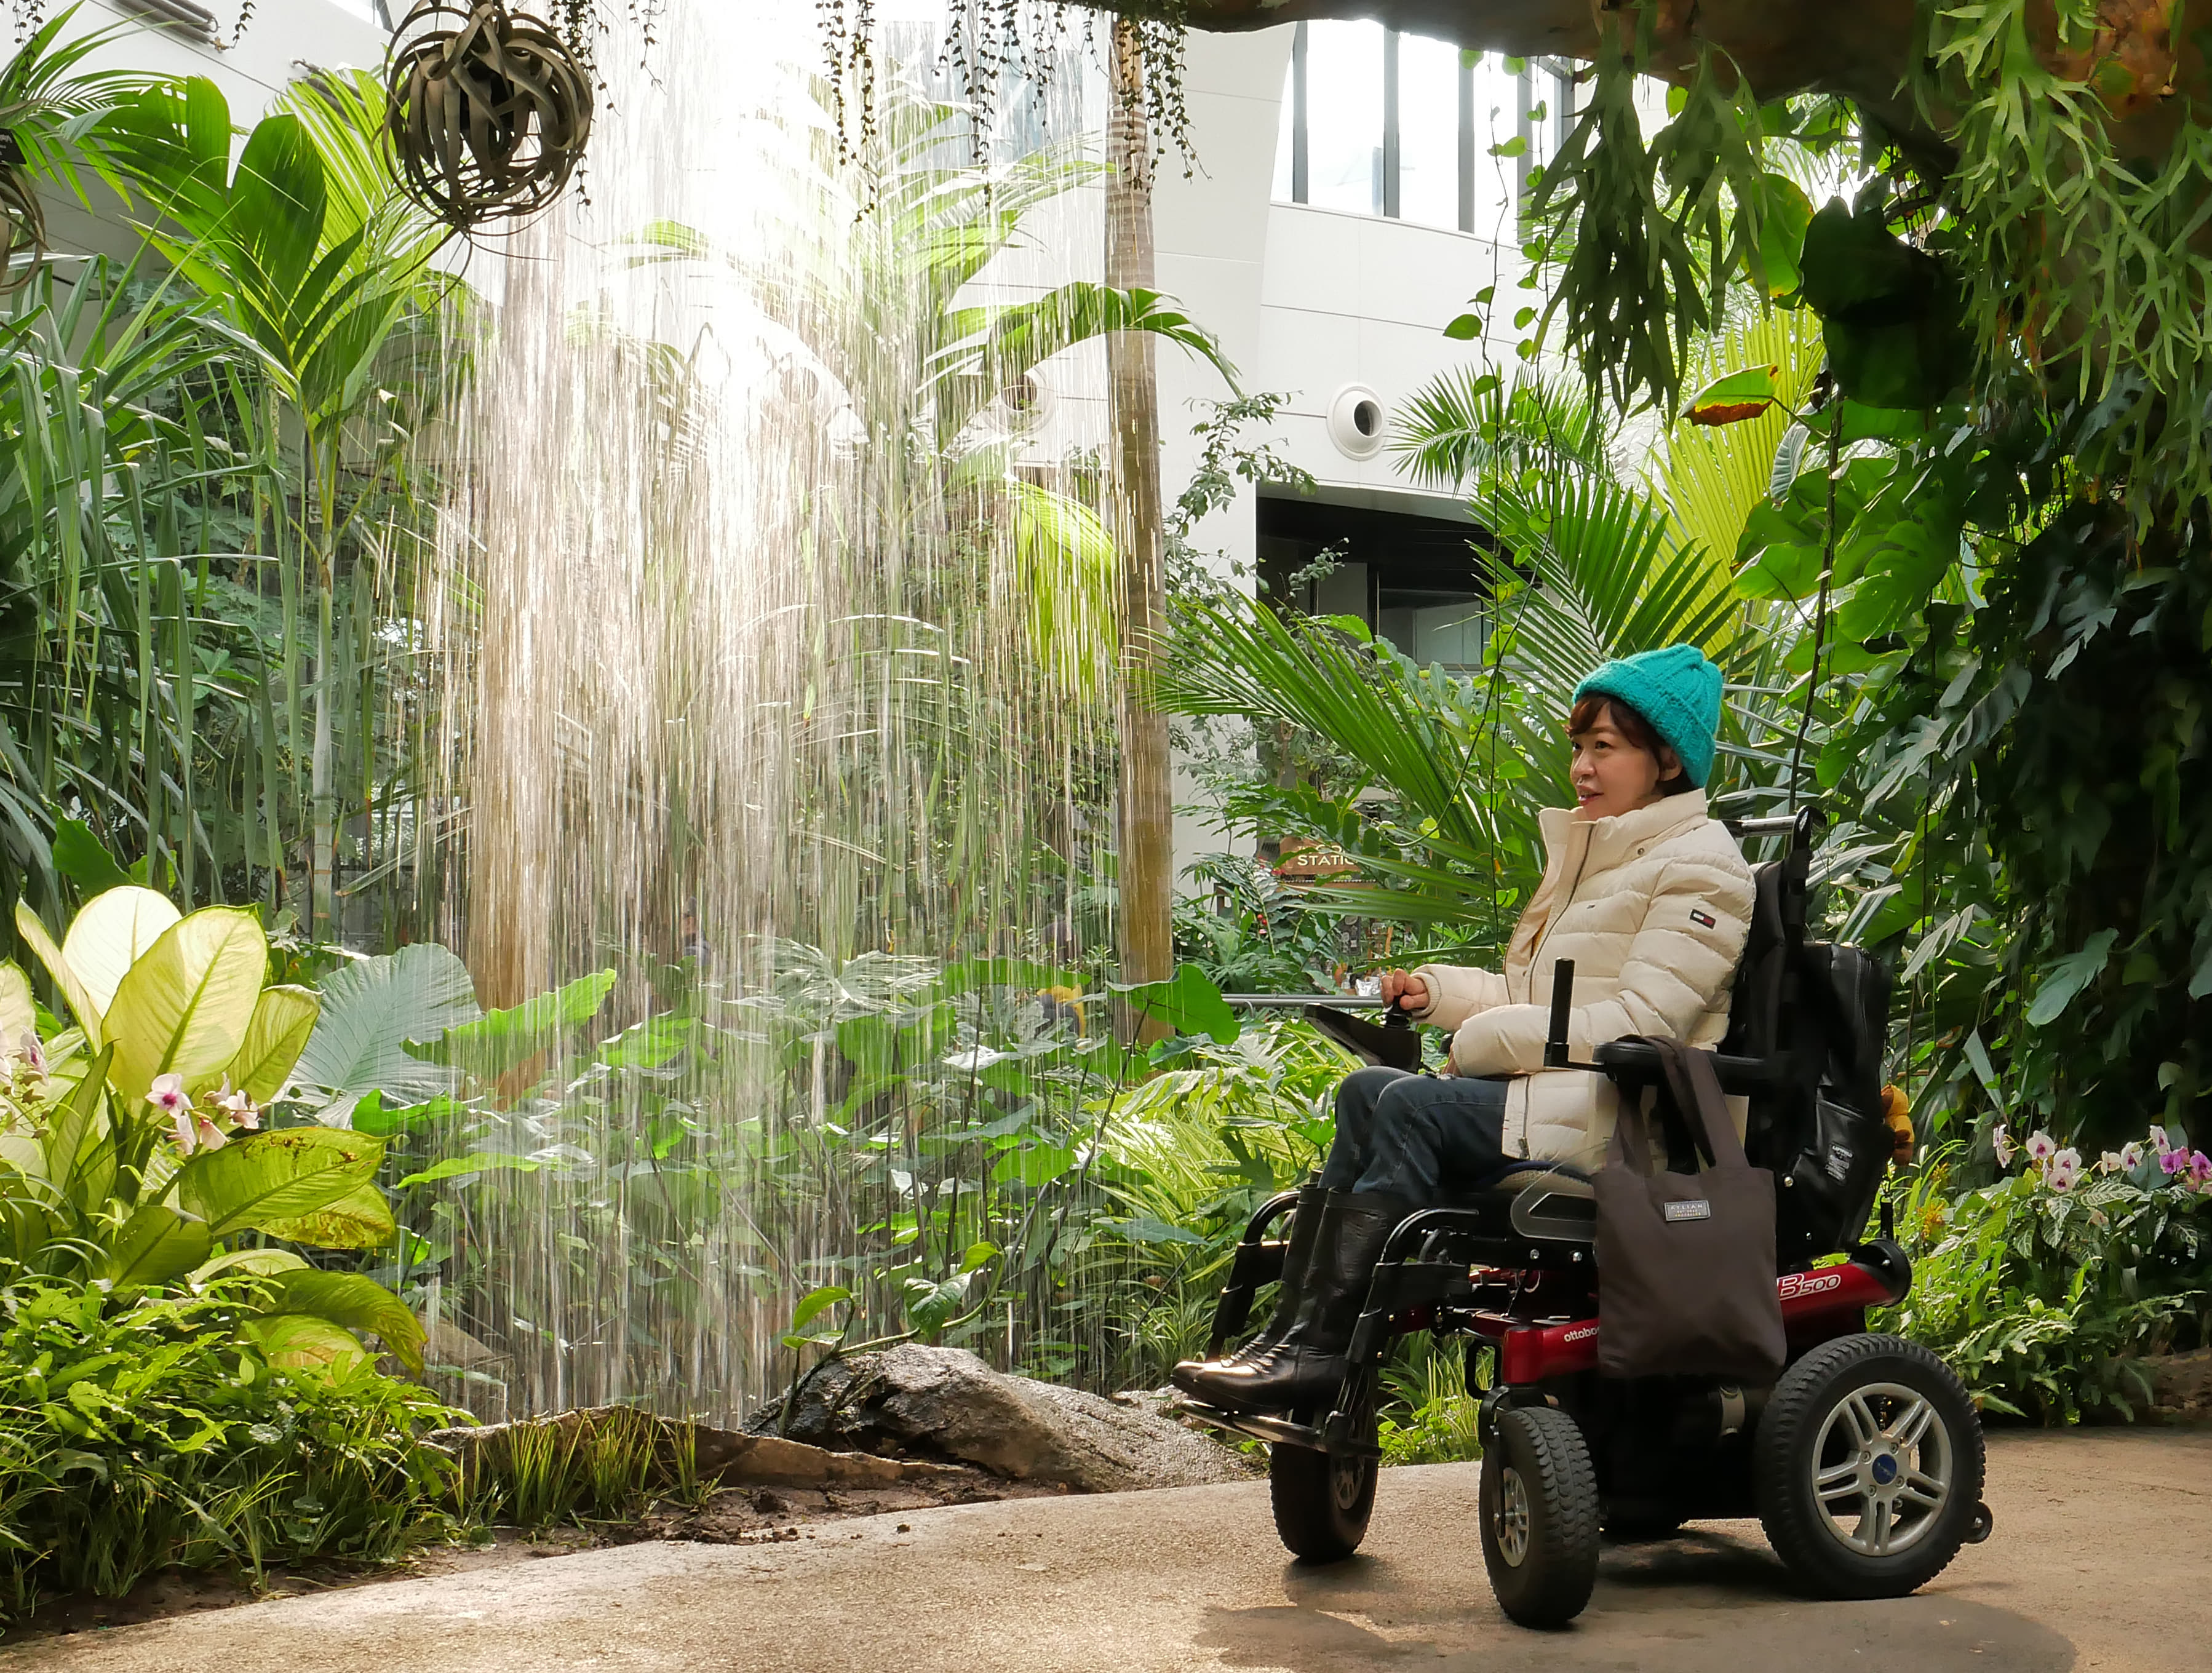 Seoul Botanic Park2 : Interior view of Seoul Botanic Park where wheelchair users can enjoy
